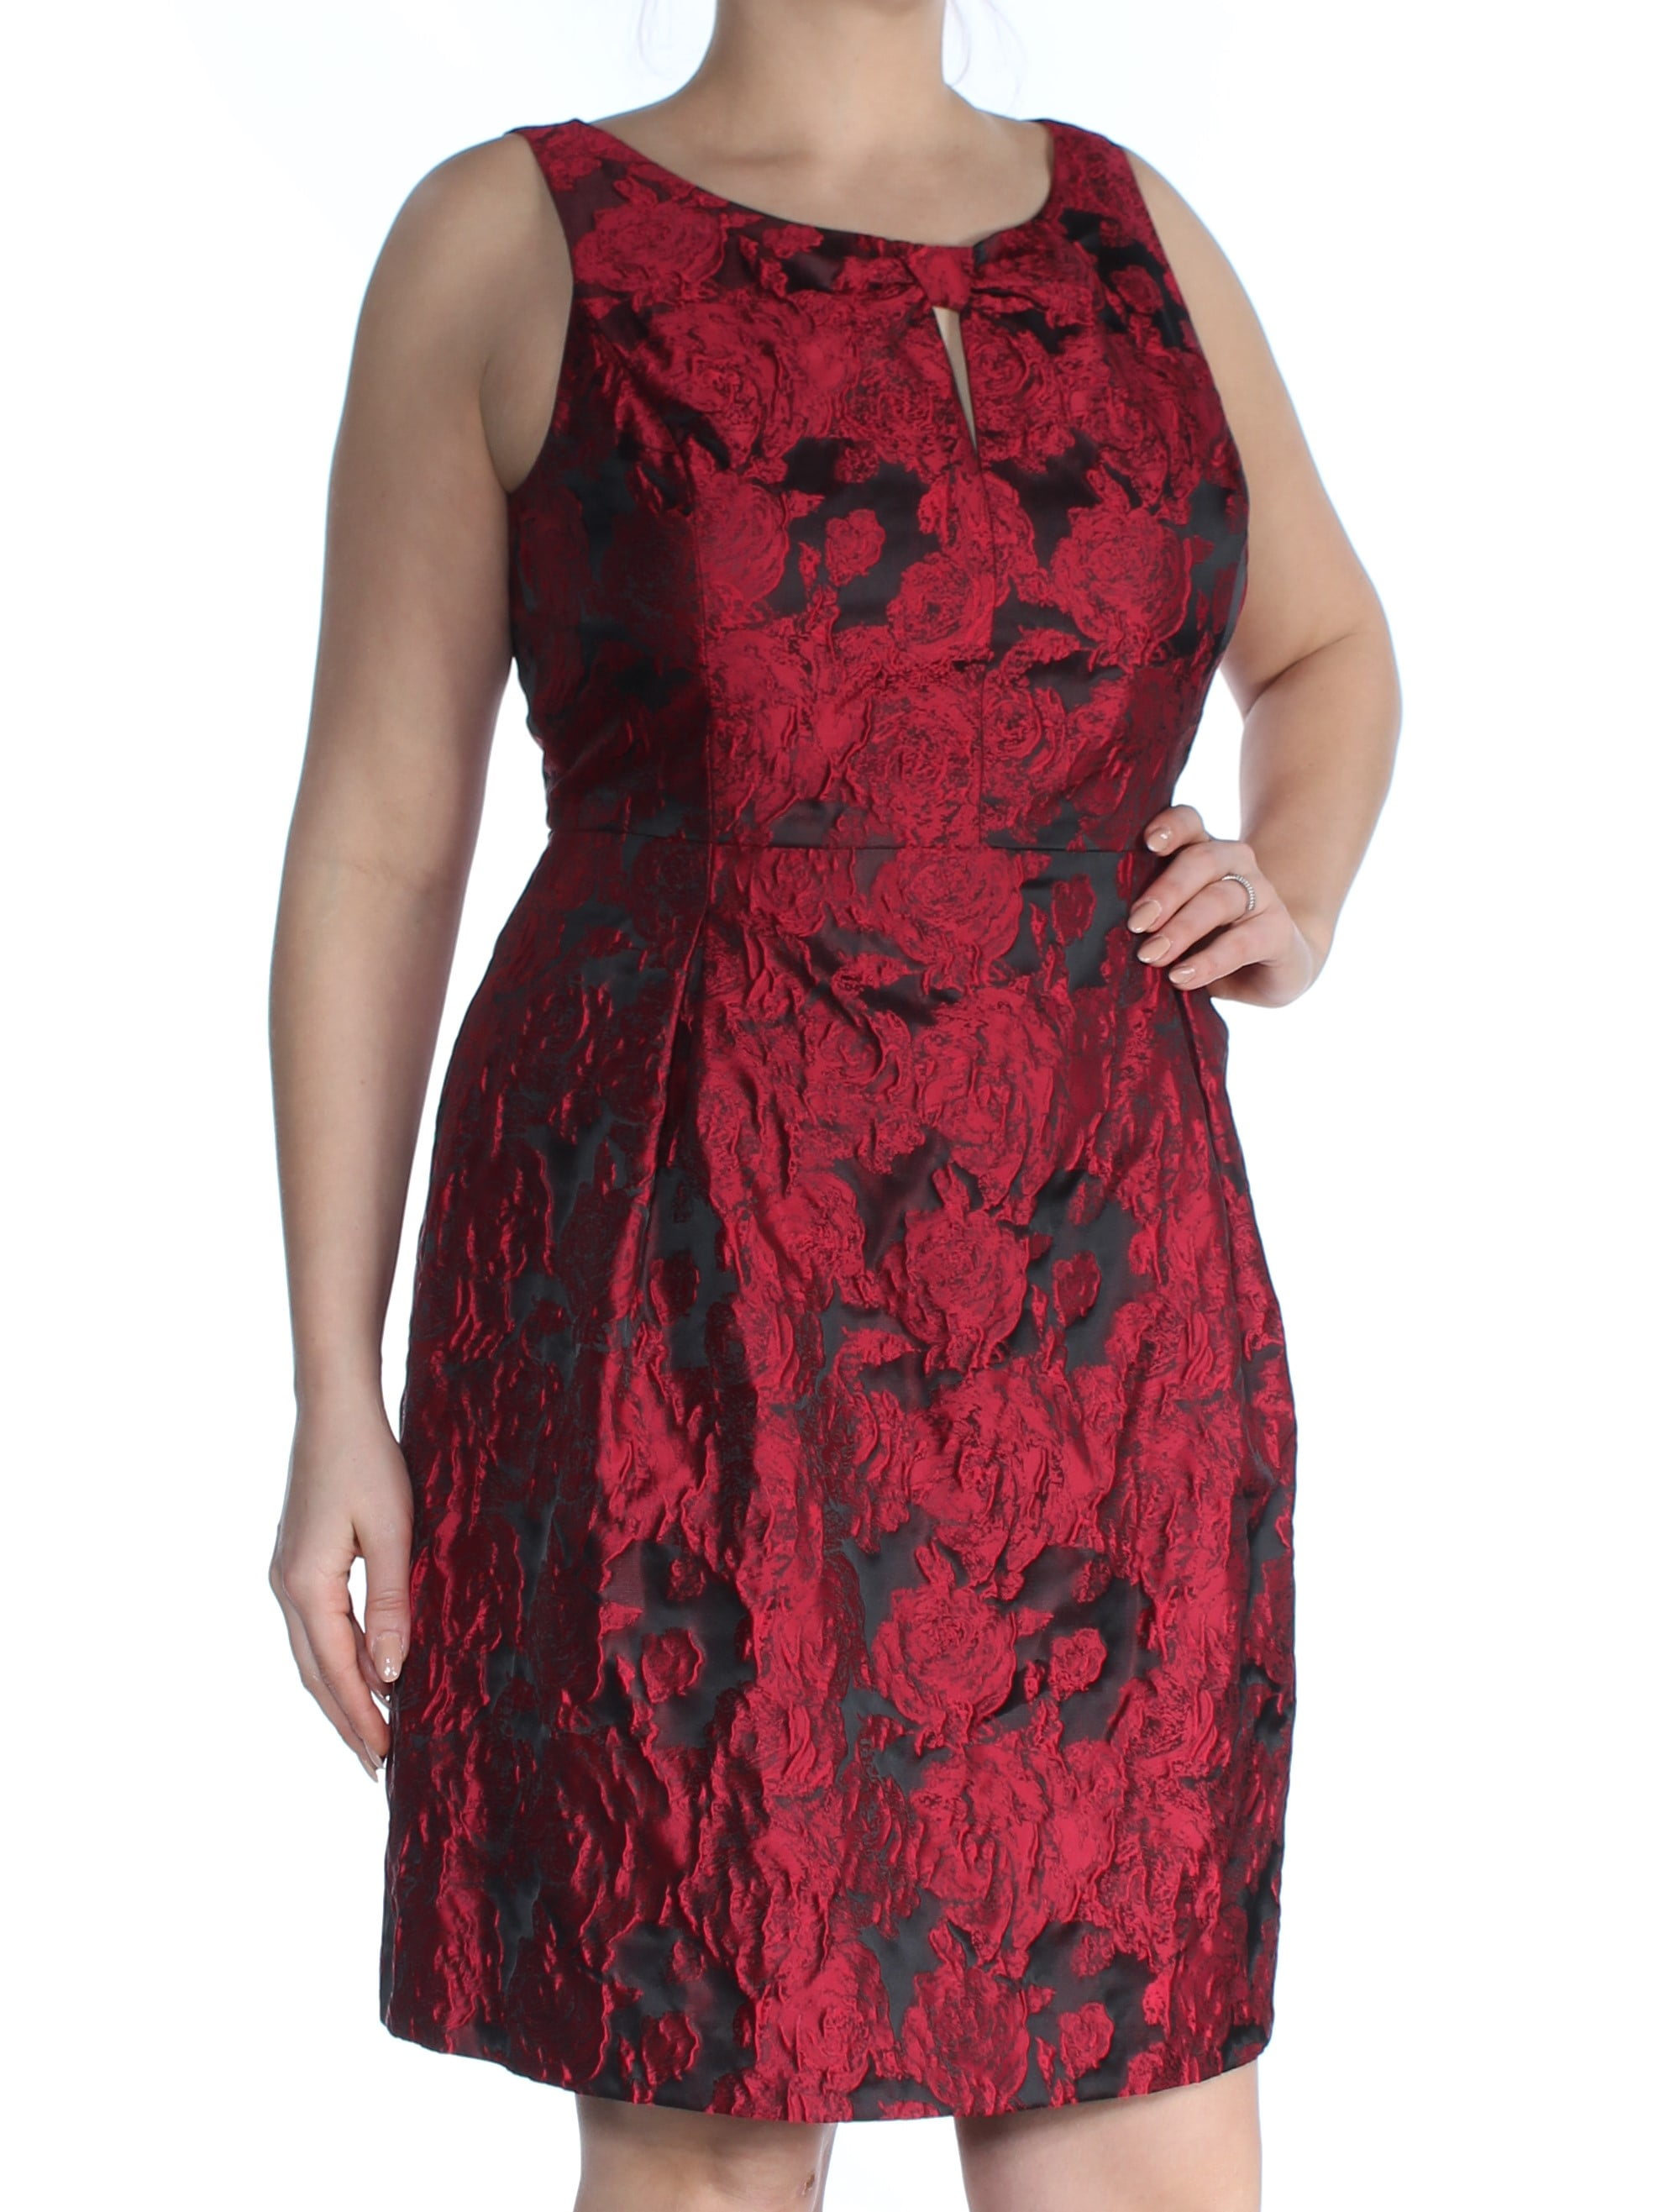 TOMMY HILFIGER $139 Womens New 1285 Red Floral Fit + Flare Dress 14 B+B 